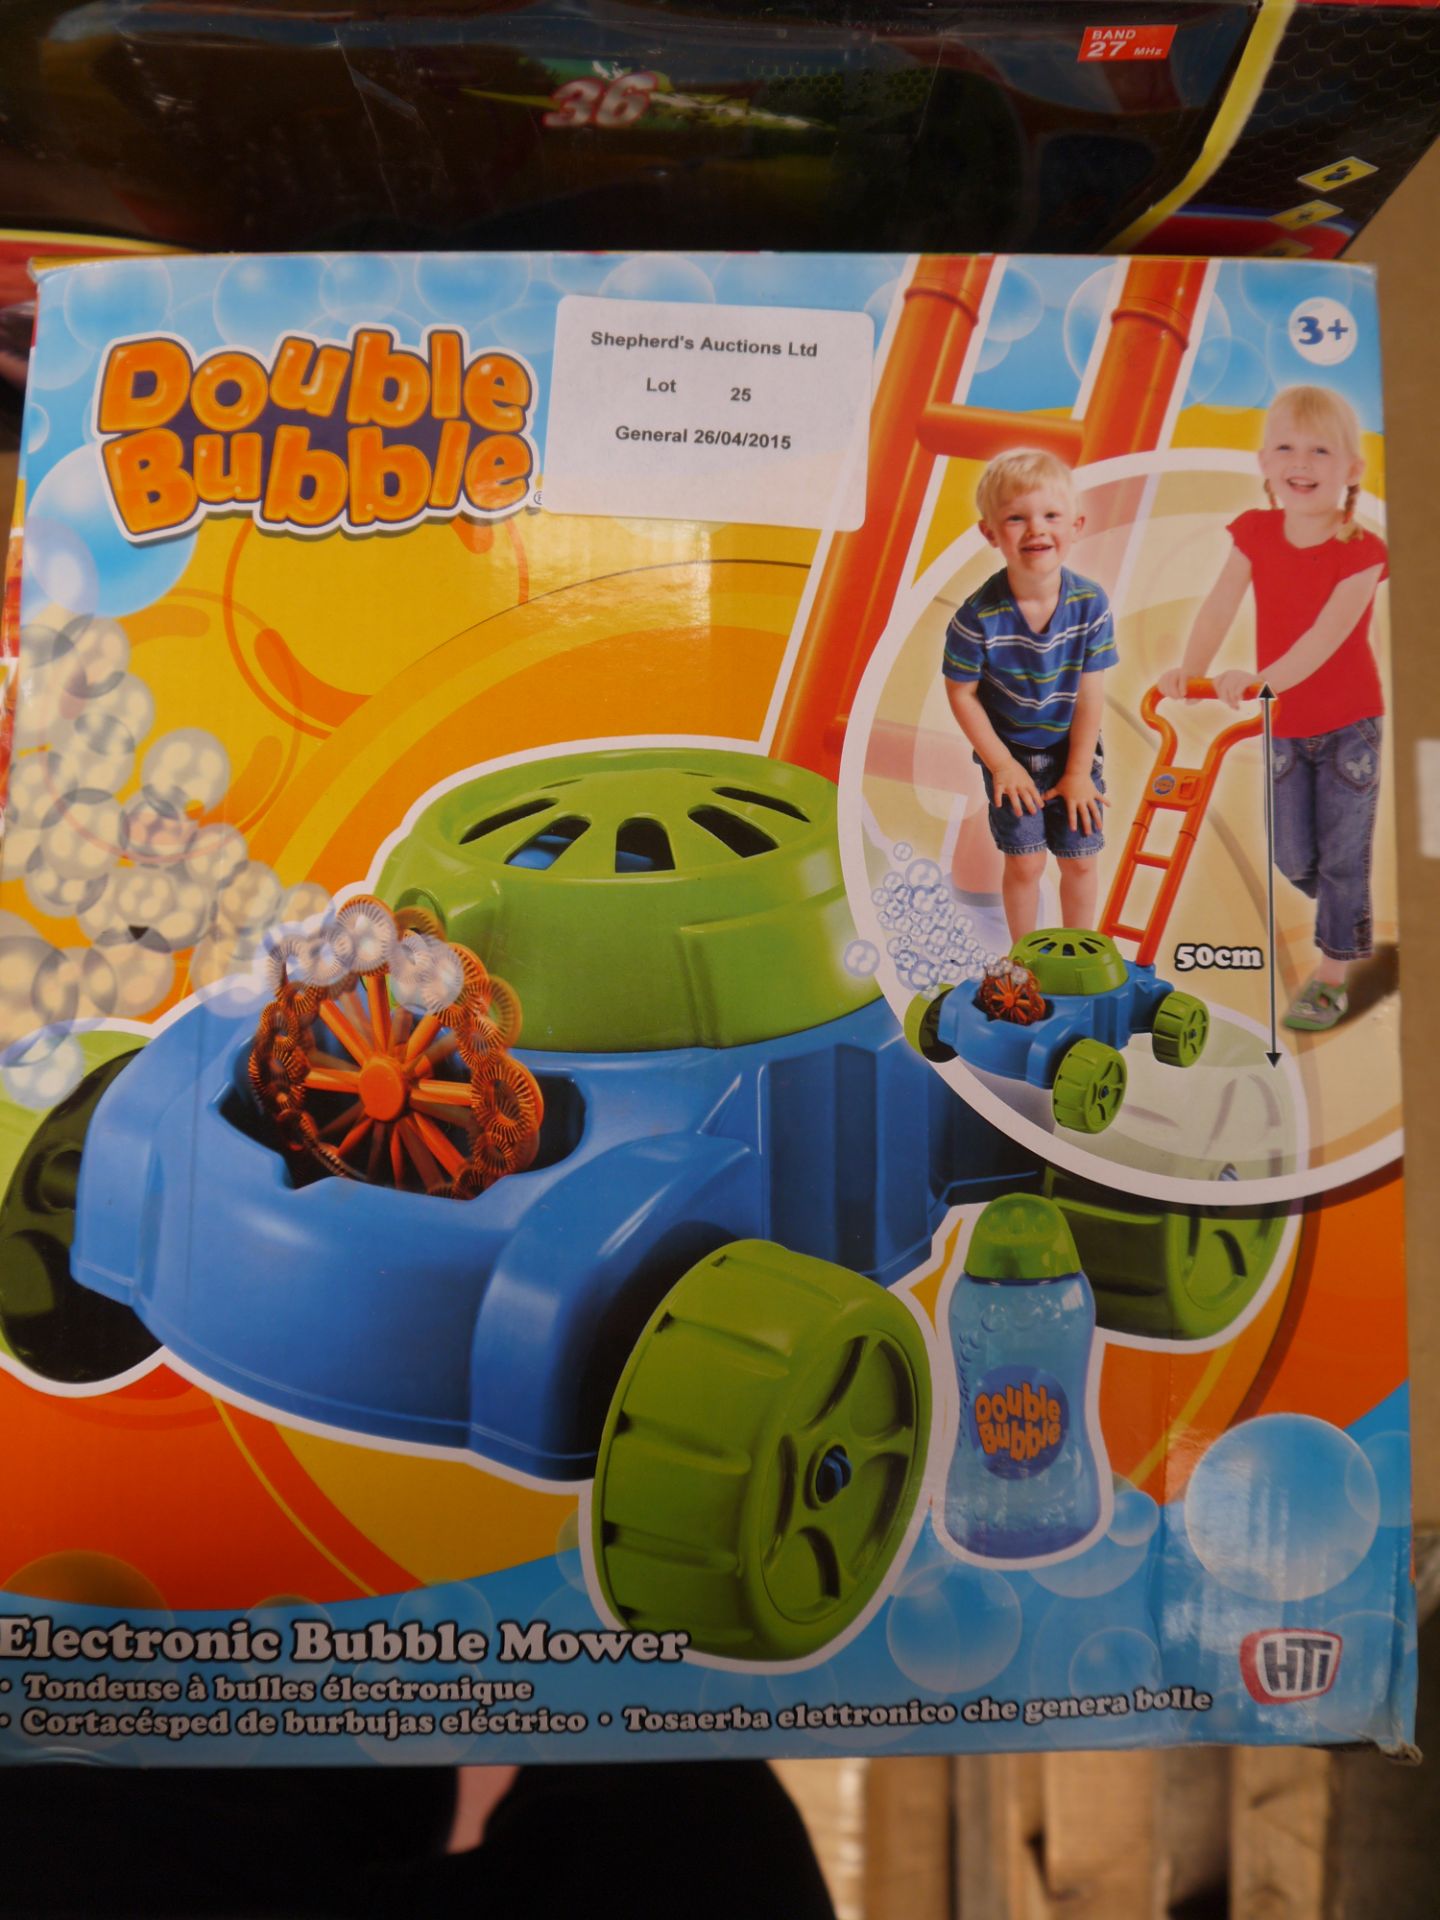 Double Bubble Electronic Bubble Mower. Boxed.